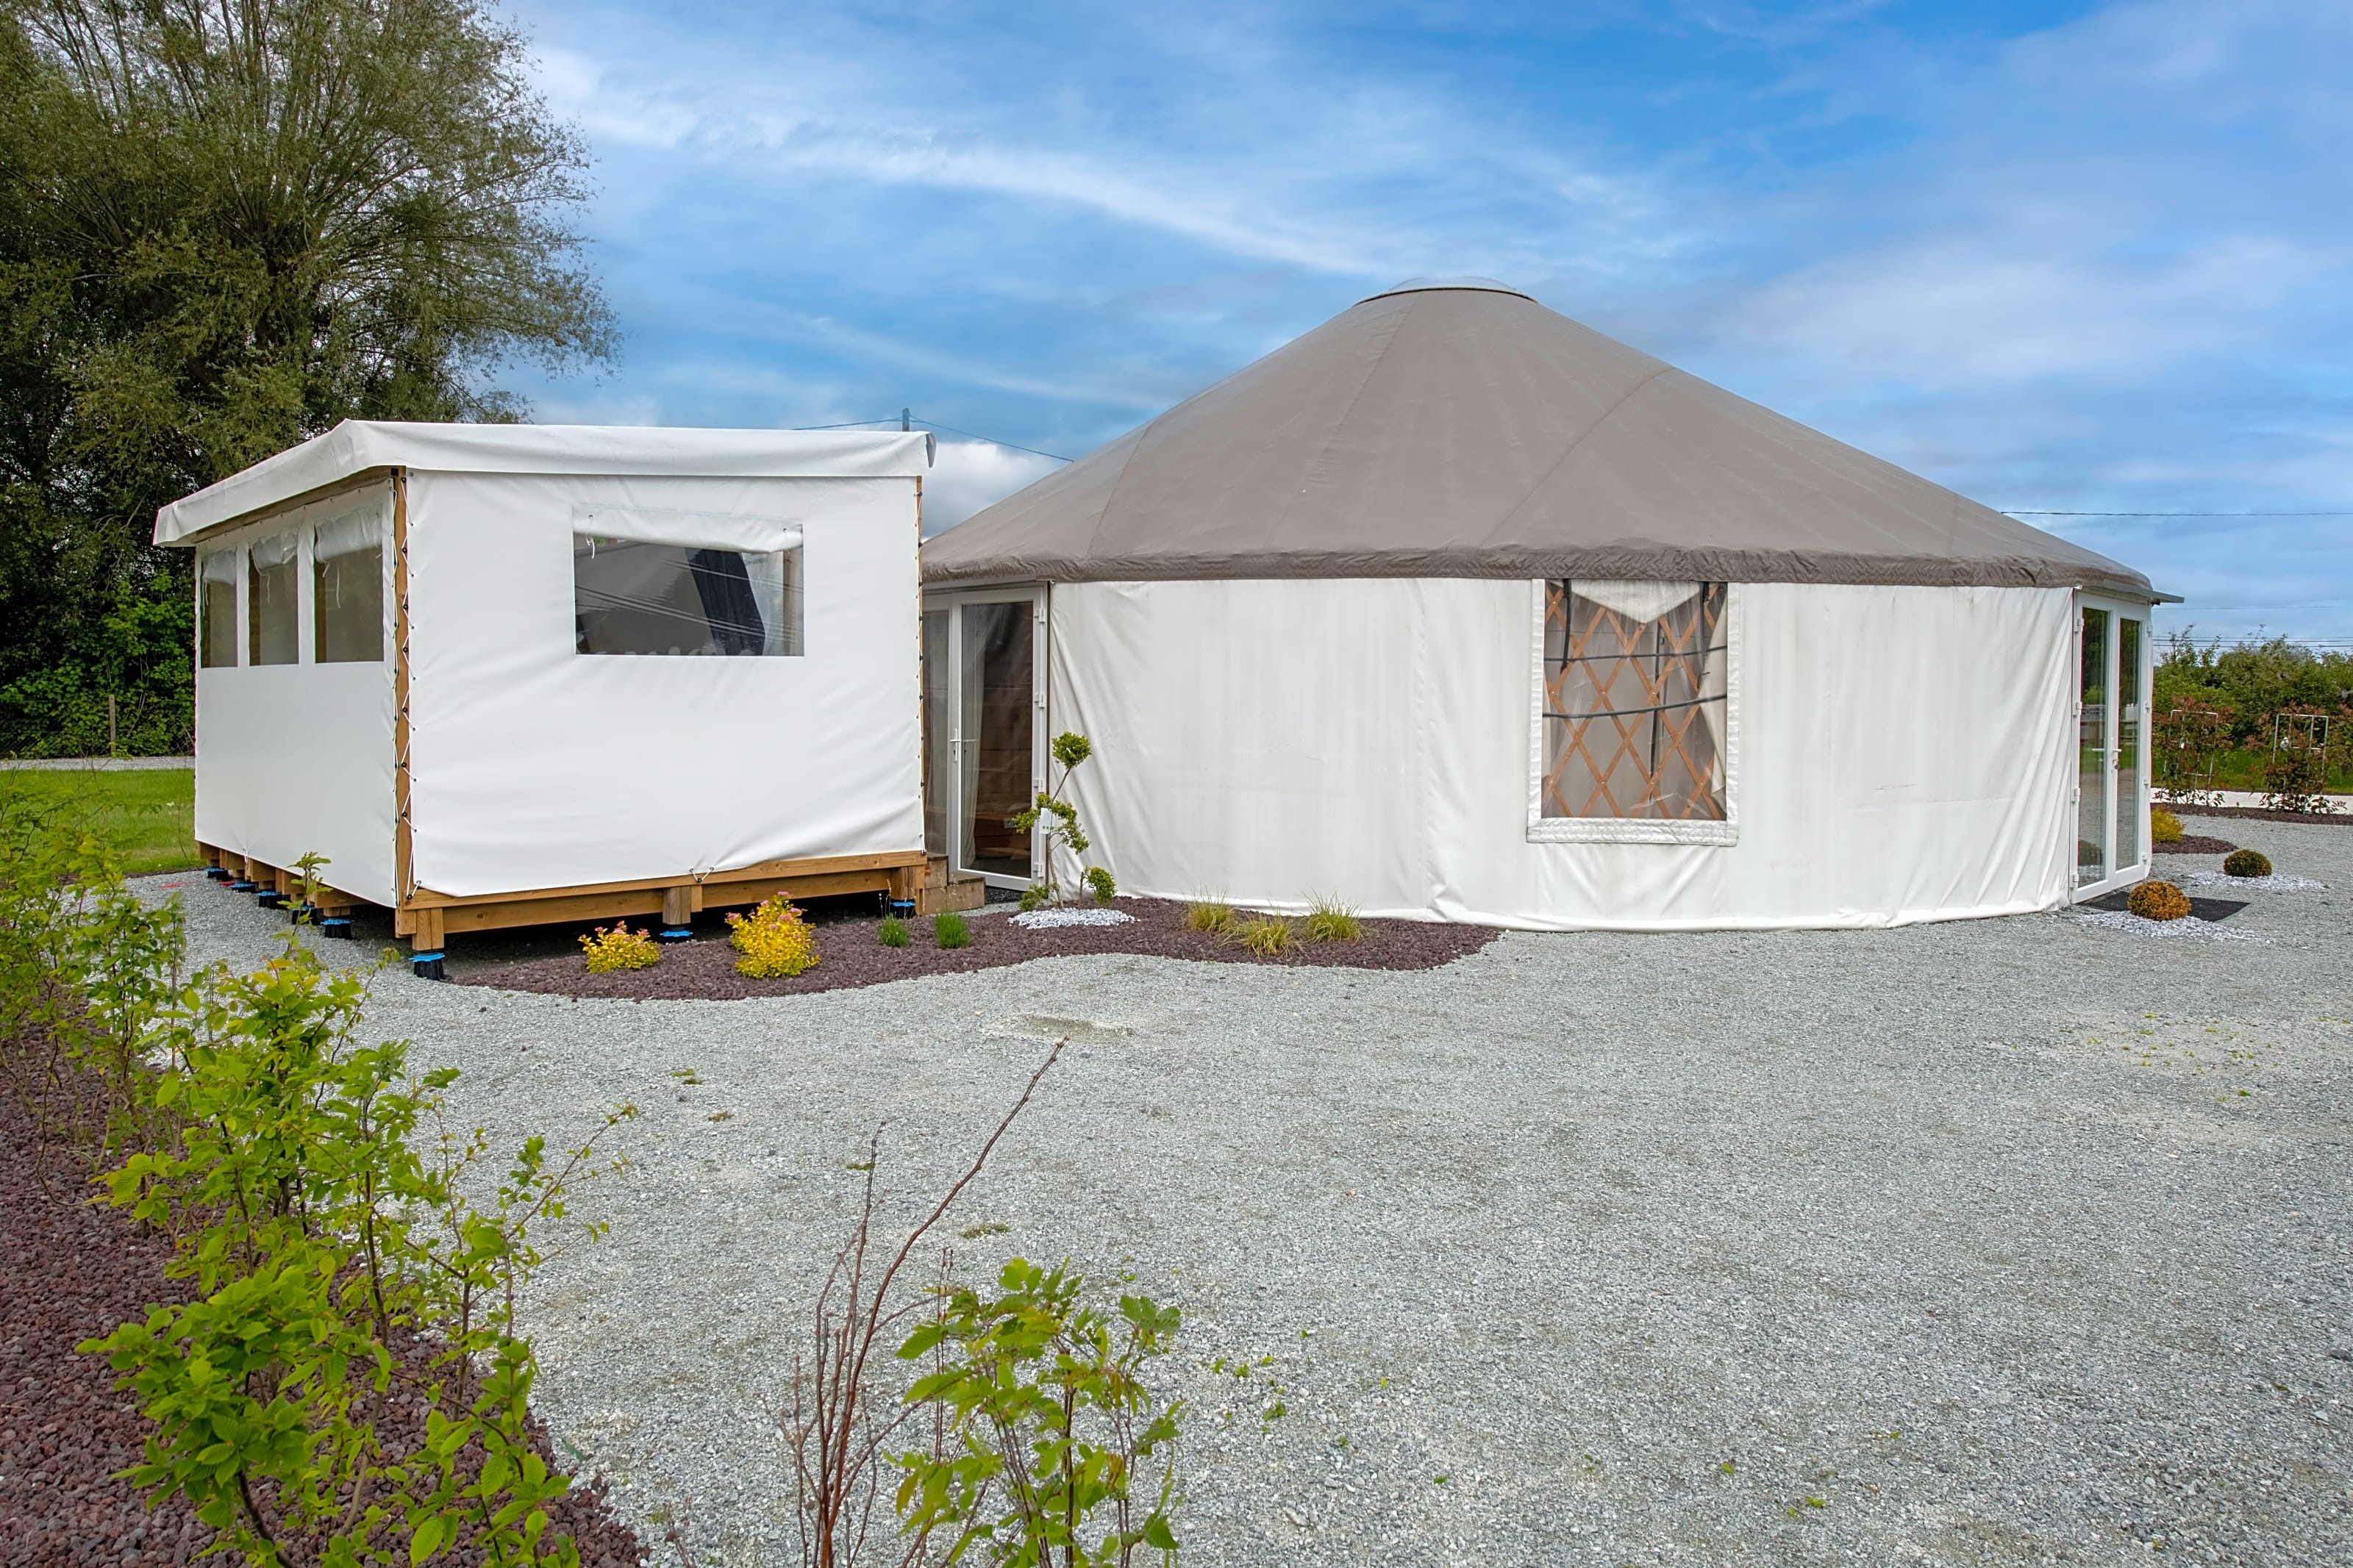 ziek computer Reisbureau Huur een tent, safaritent, tipi of wigwam in Hoog-Normandië, Frankrijk 2023  vanaf € 81 per nacht - Pitchup